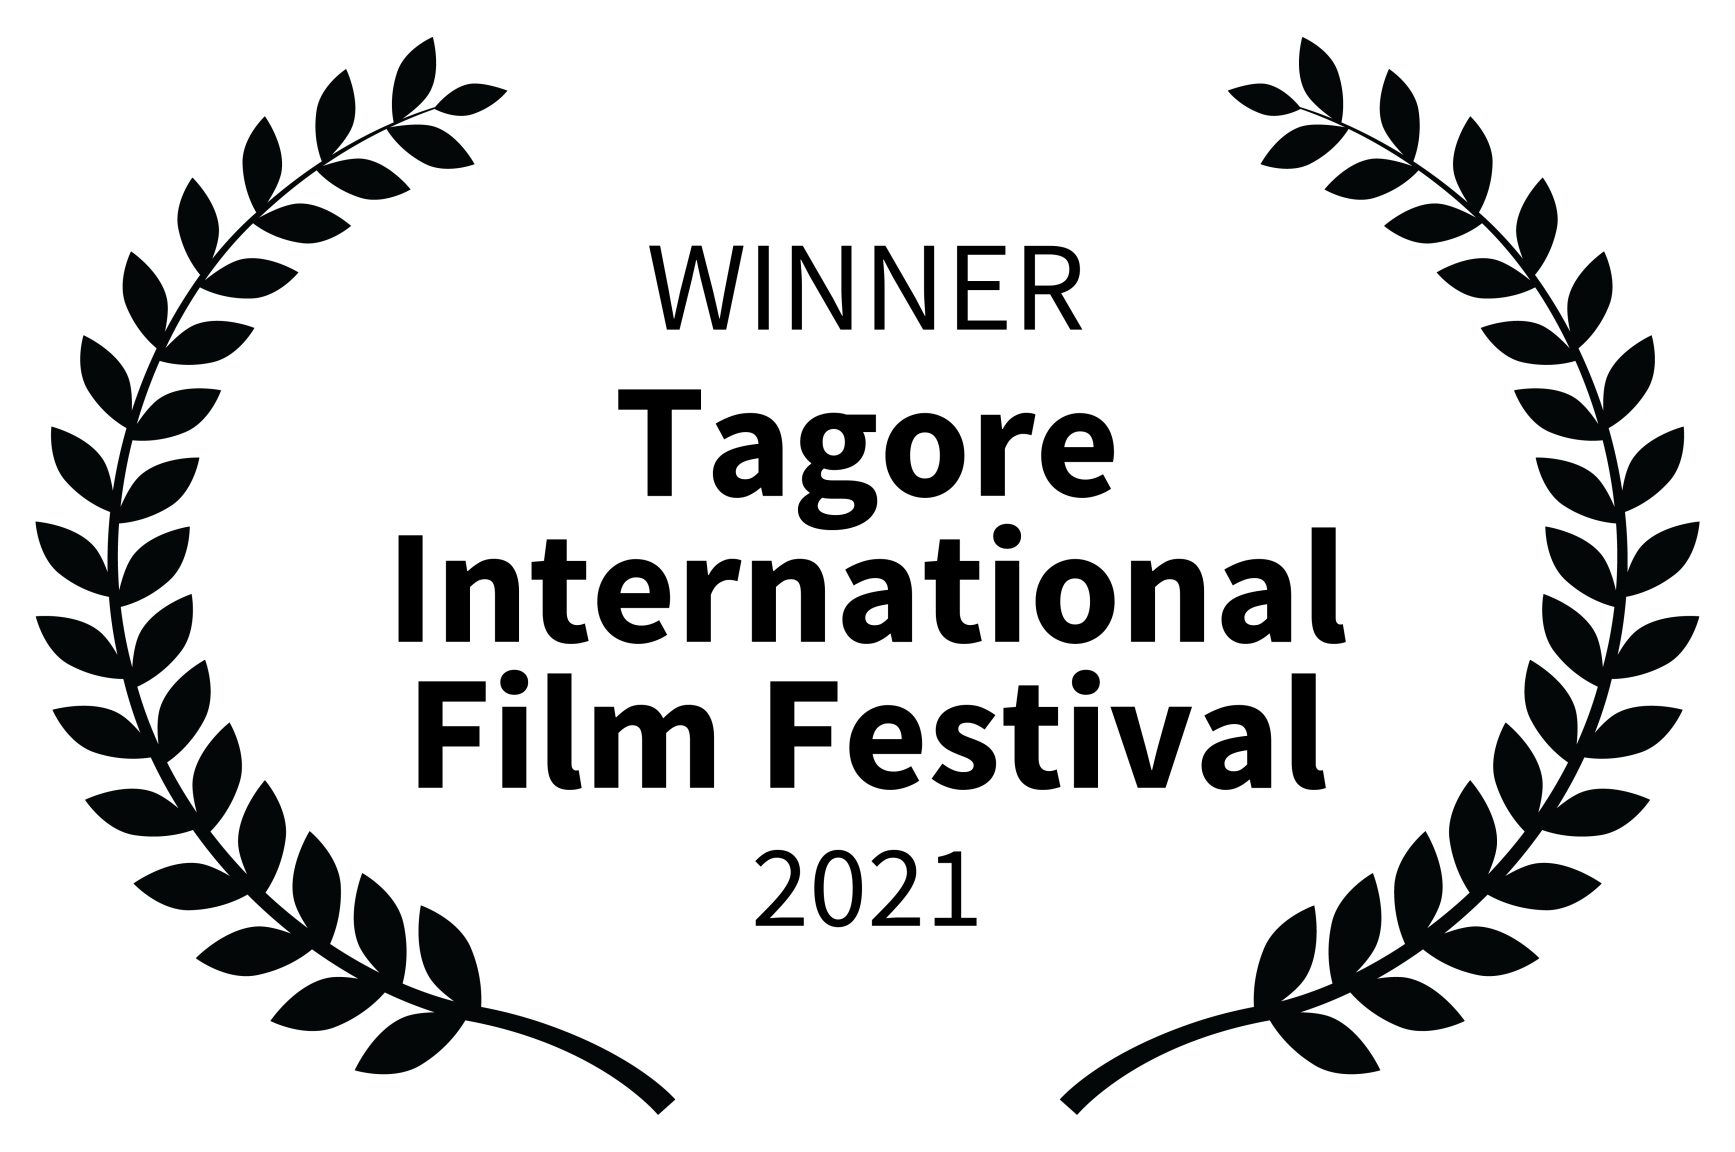 WINNER Tagore International Film Festival 2021